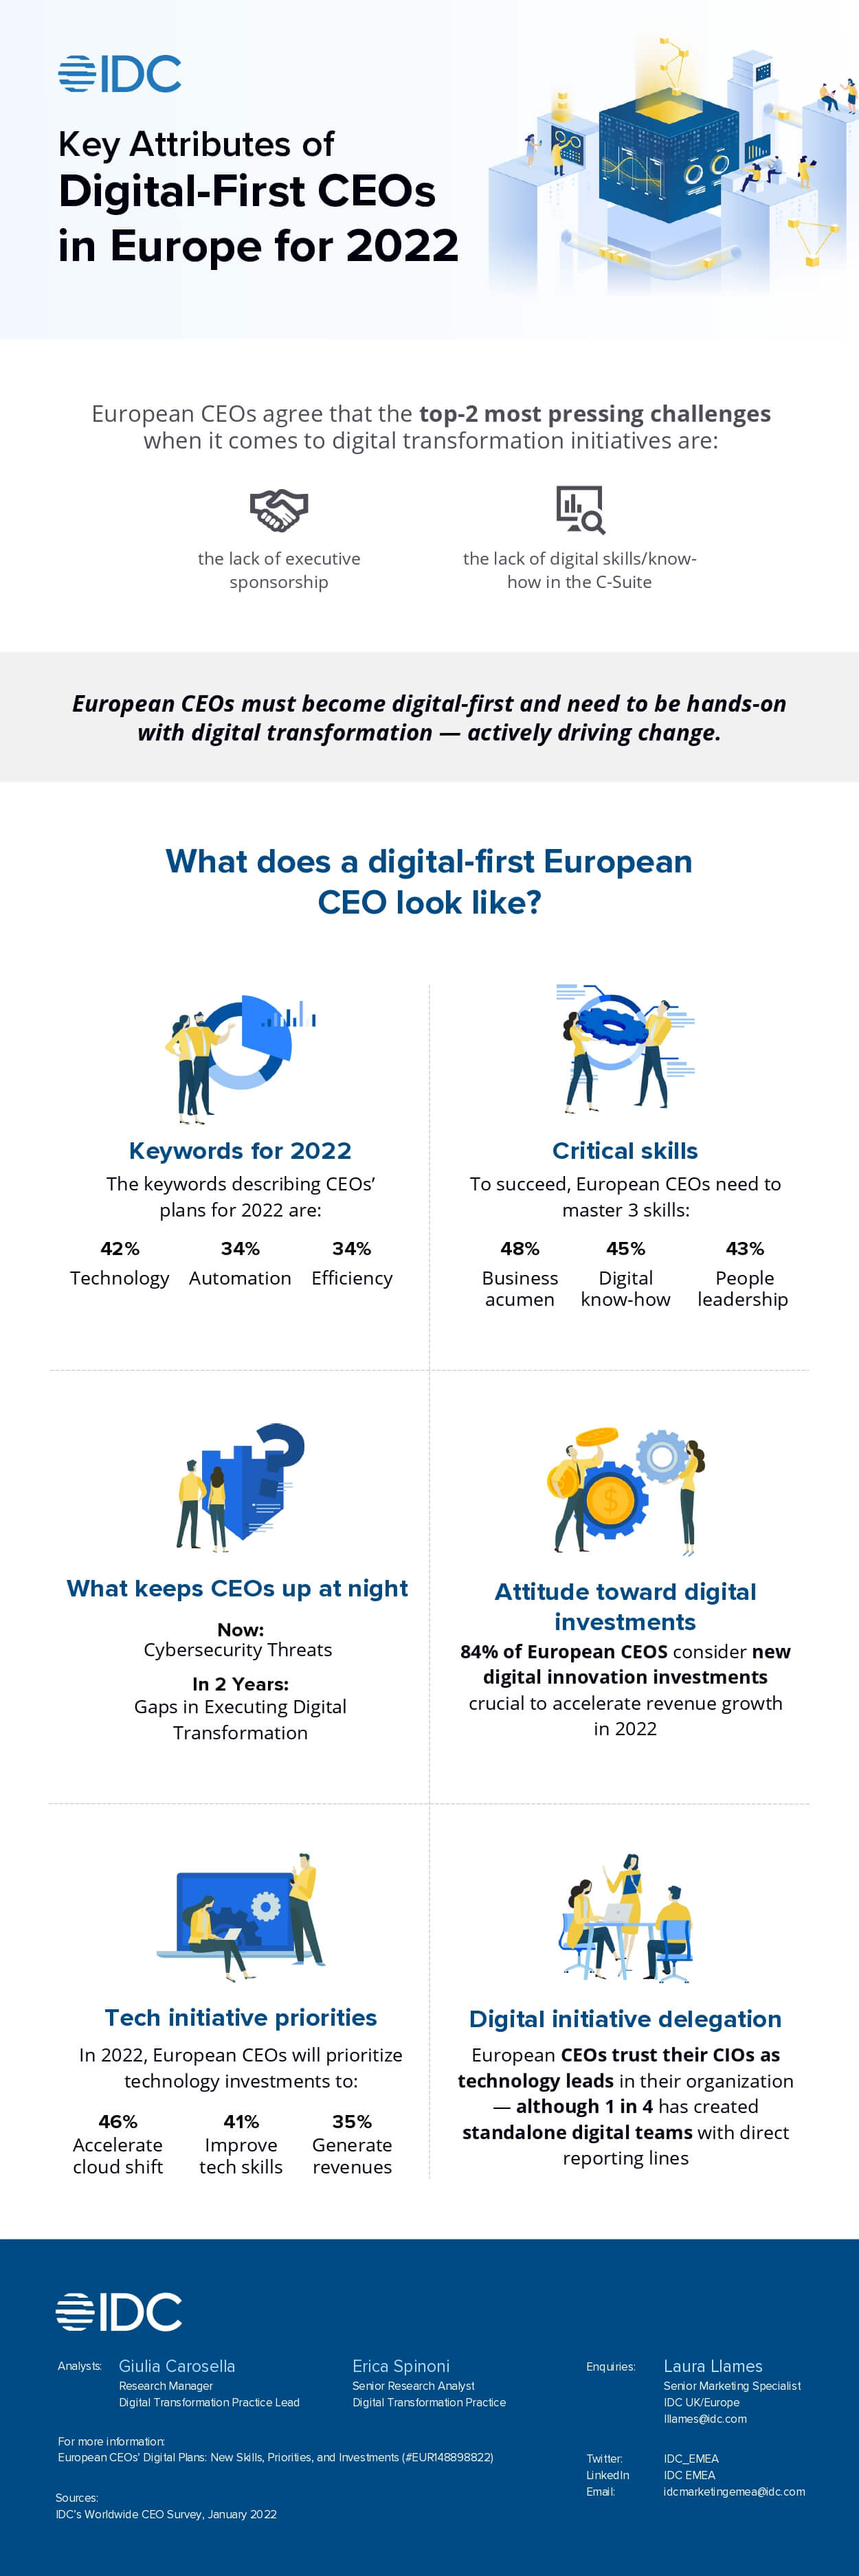 European CEO attributes